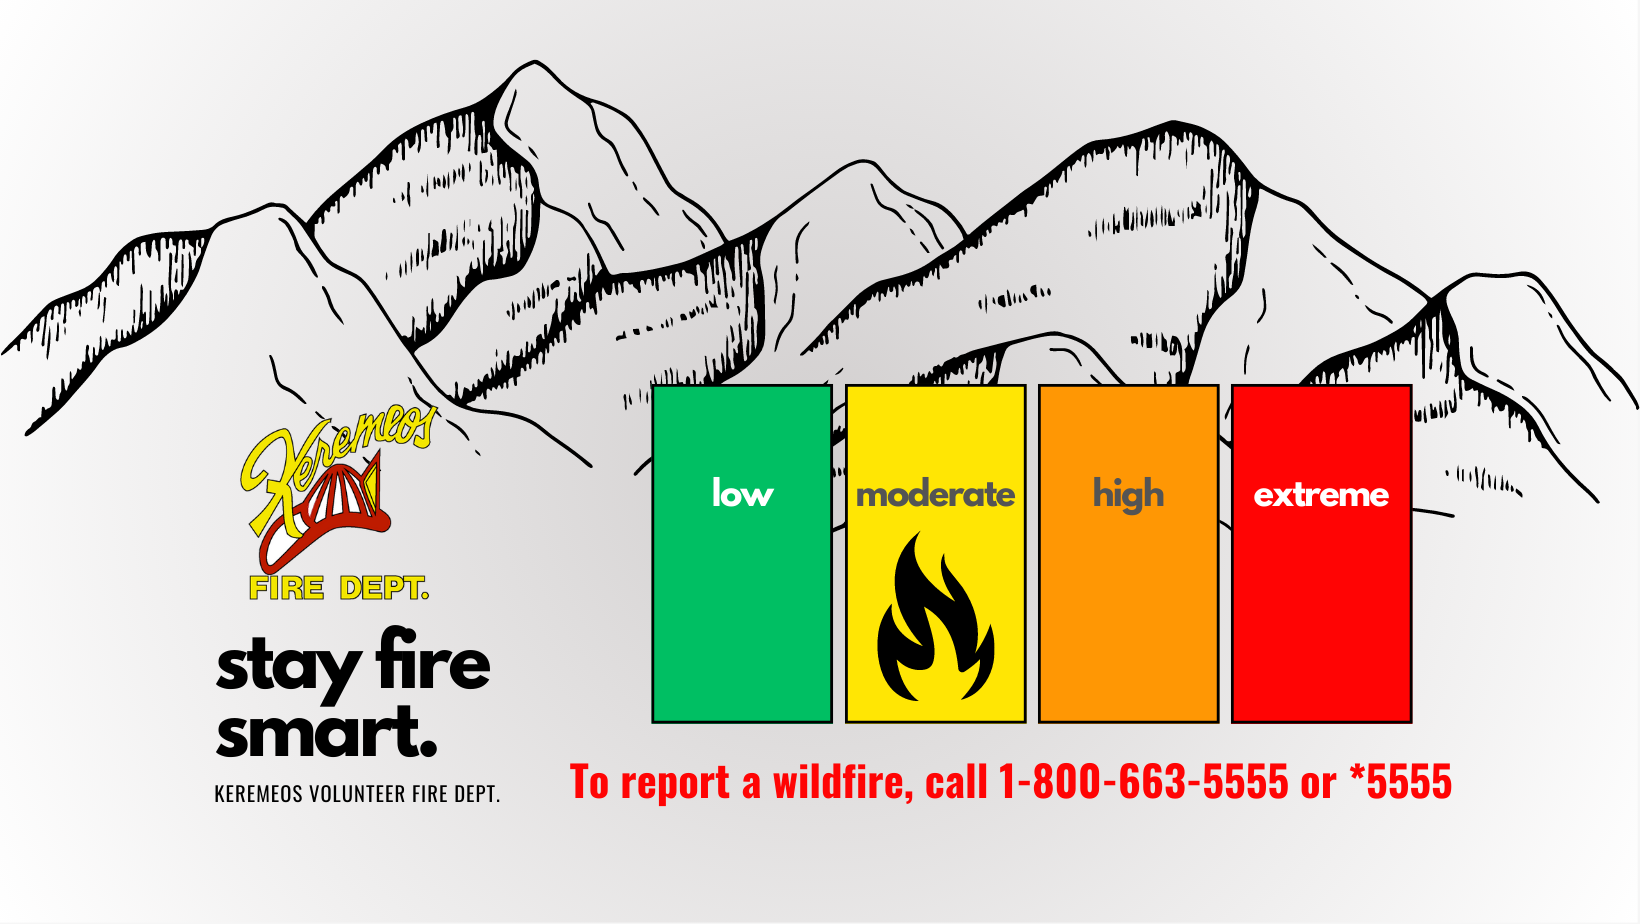 KVFD - Current Fire Danger Rating - 2 - Low